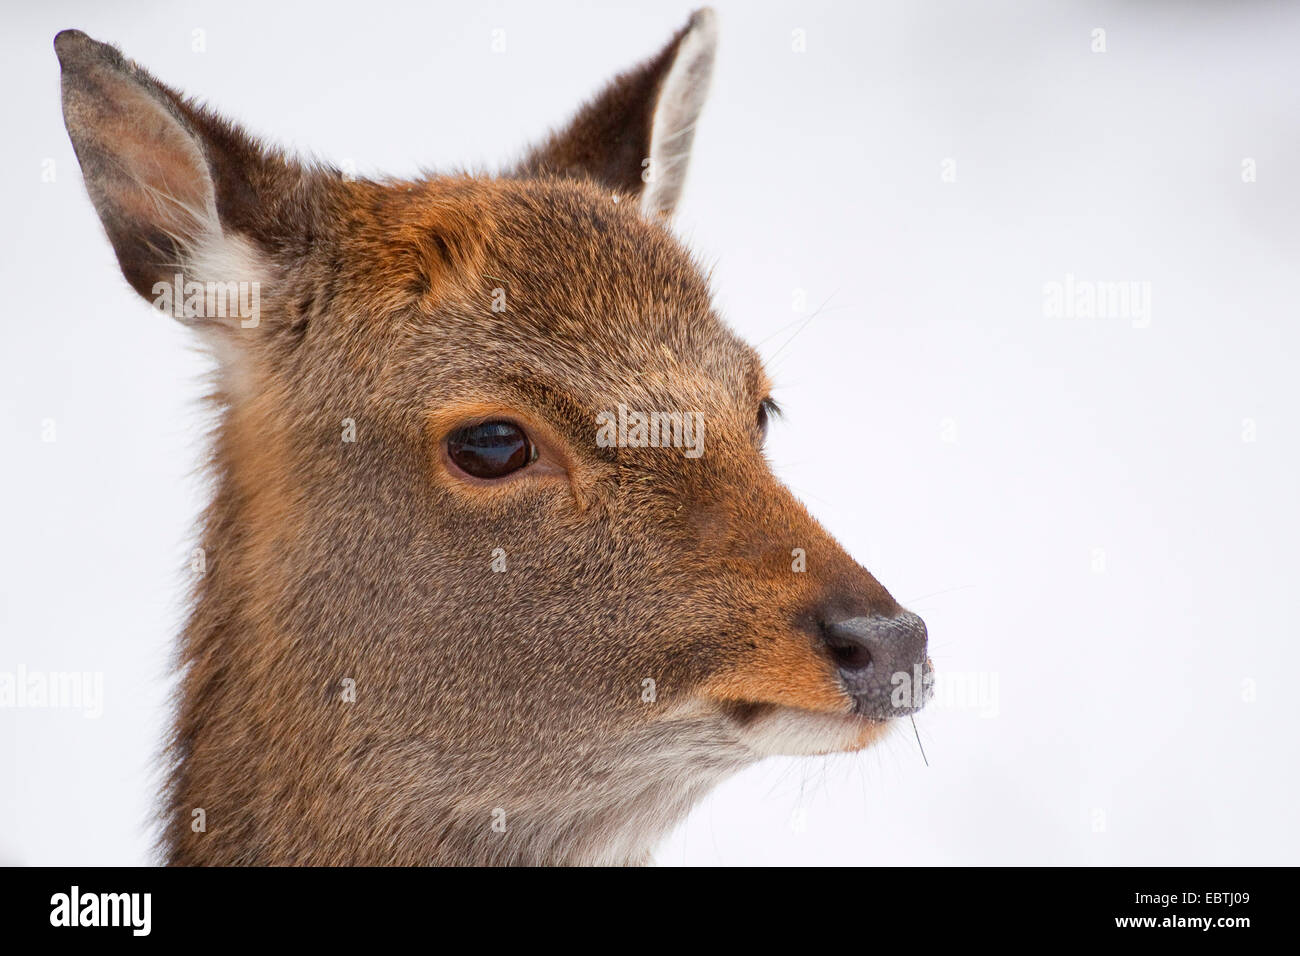 sika deer (Cervus nippon), portrait of a juvenile, Germany Stock Photo